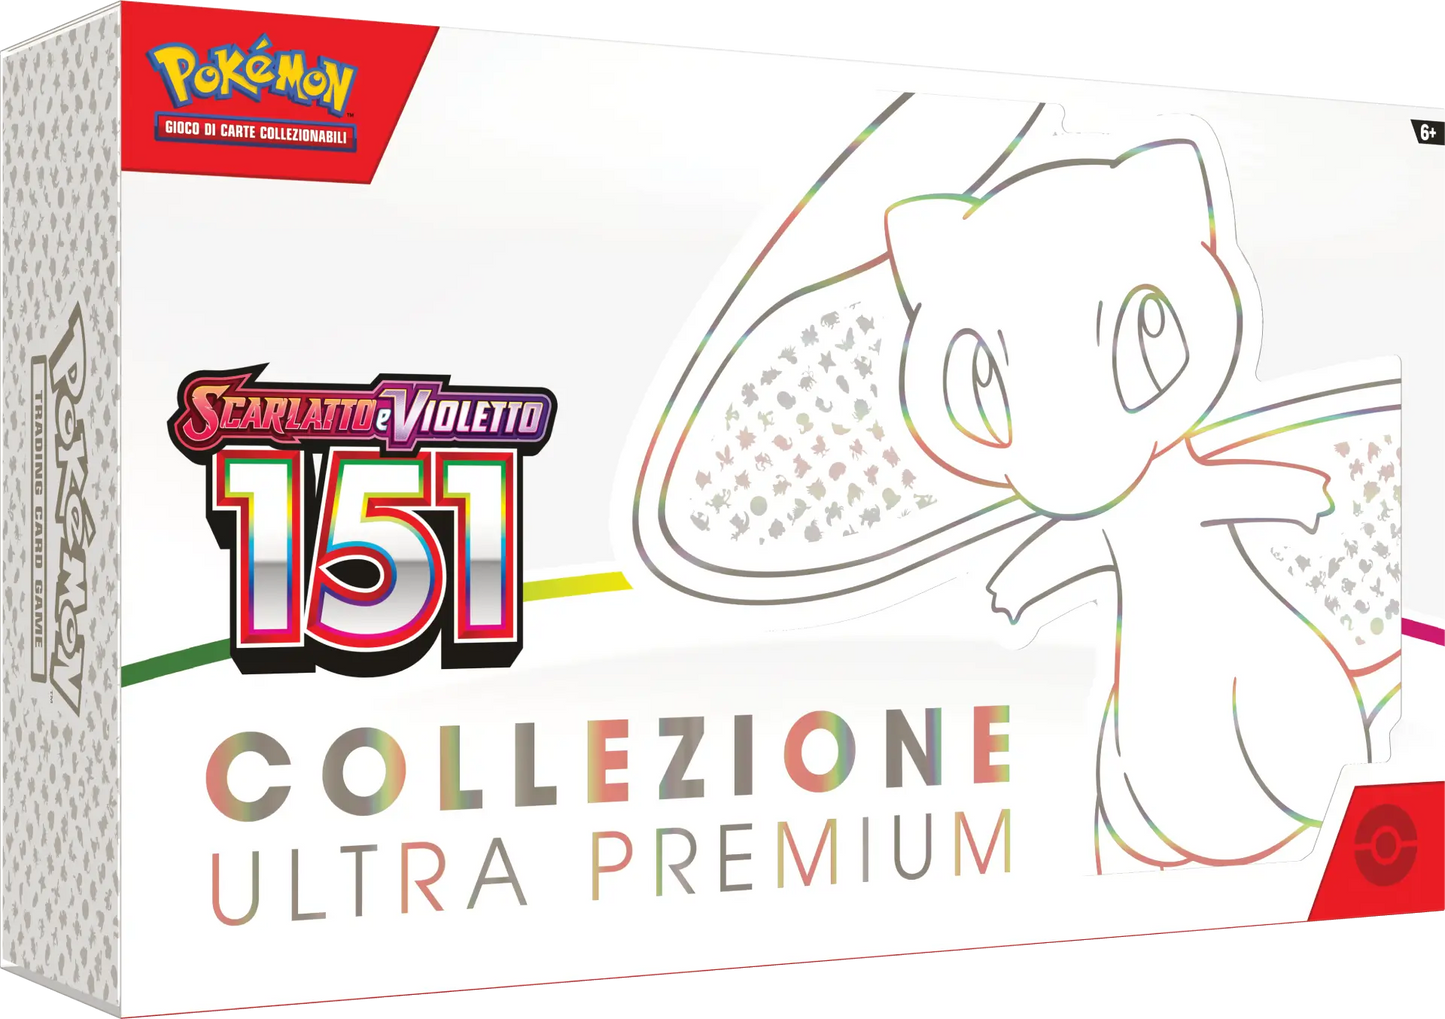 Pokemon cards "SCARLET AND VIOLET 151 MEW ULTRA PREMIUM" ITA